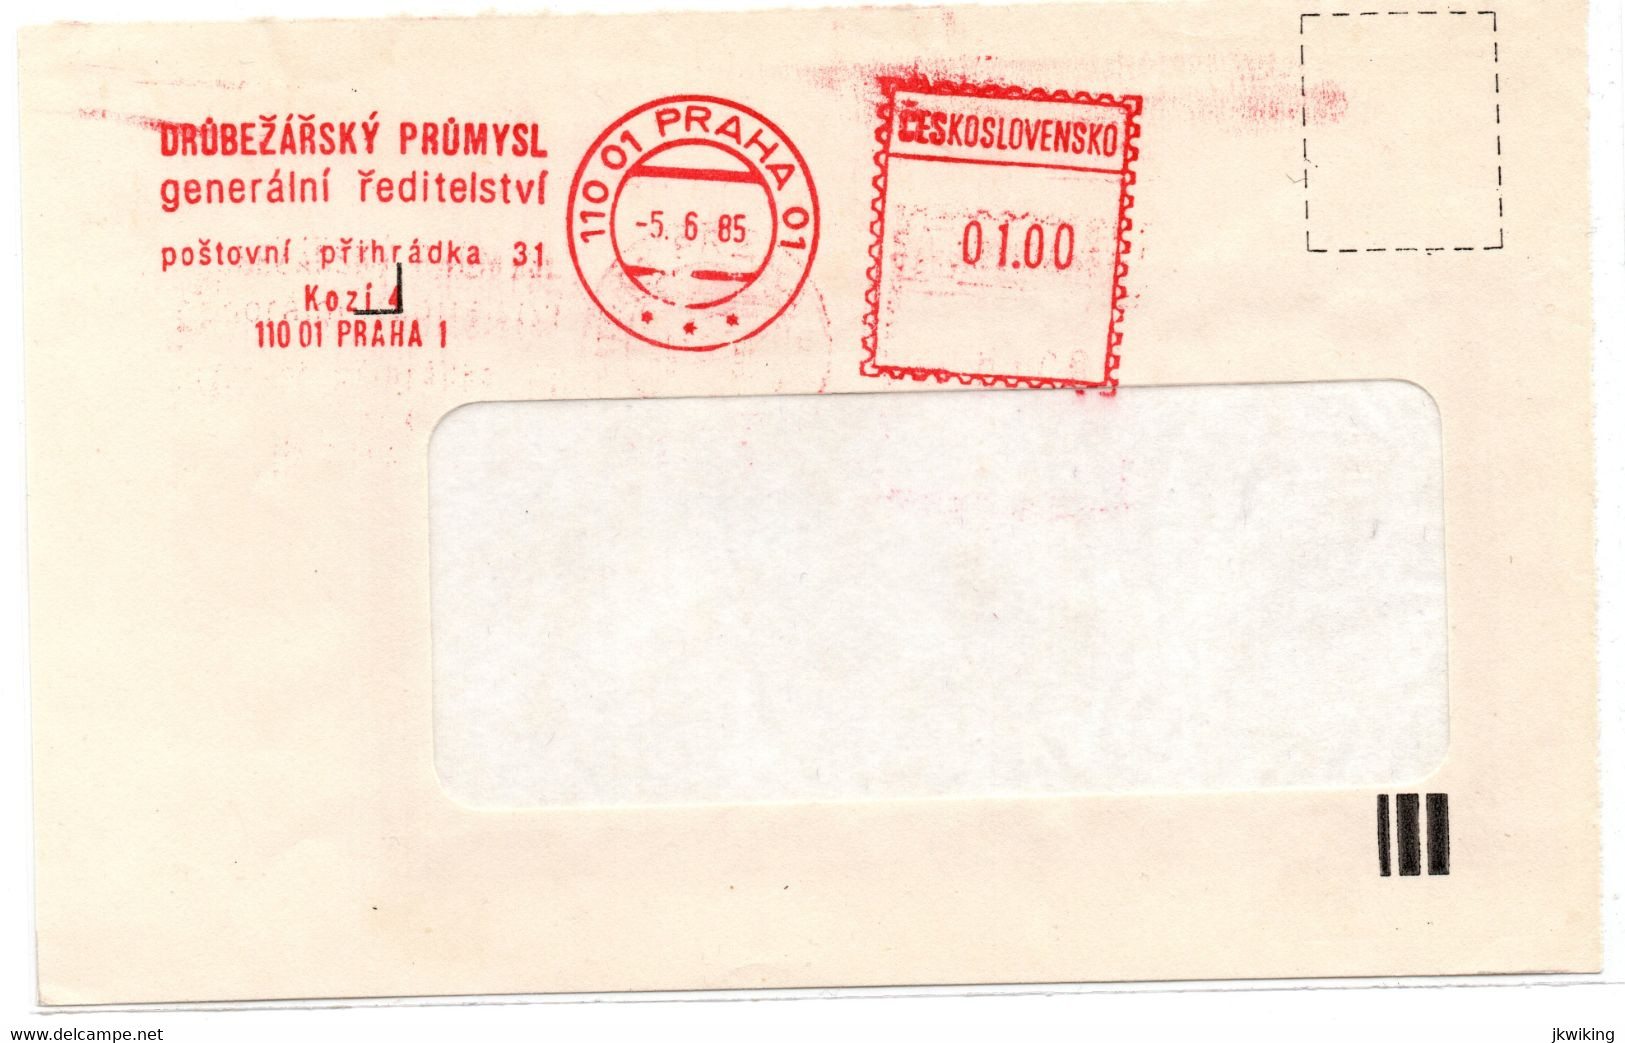 Machine Promotional Stamp Poultry Industry Prague 01 - 1985 - Czechoslovakia - Werbestempel